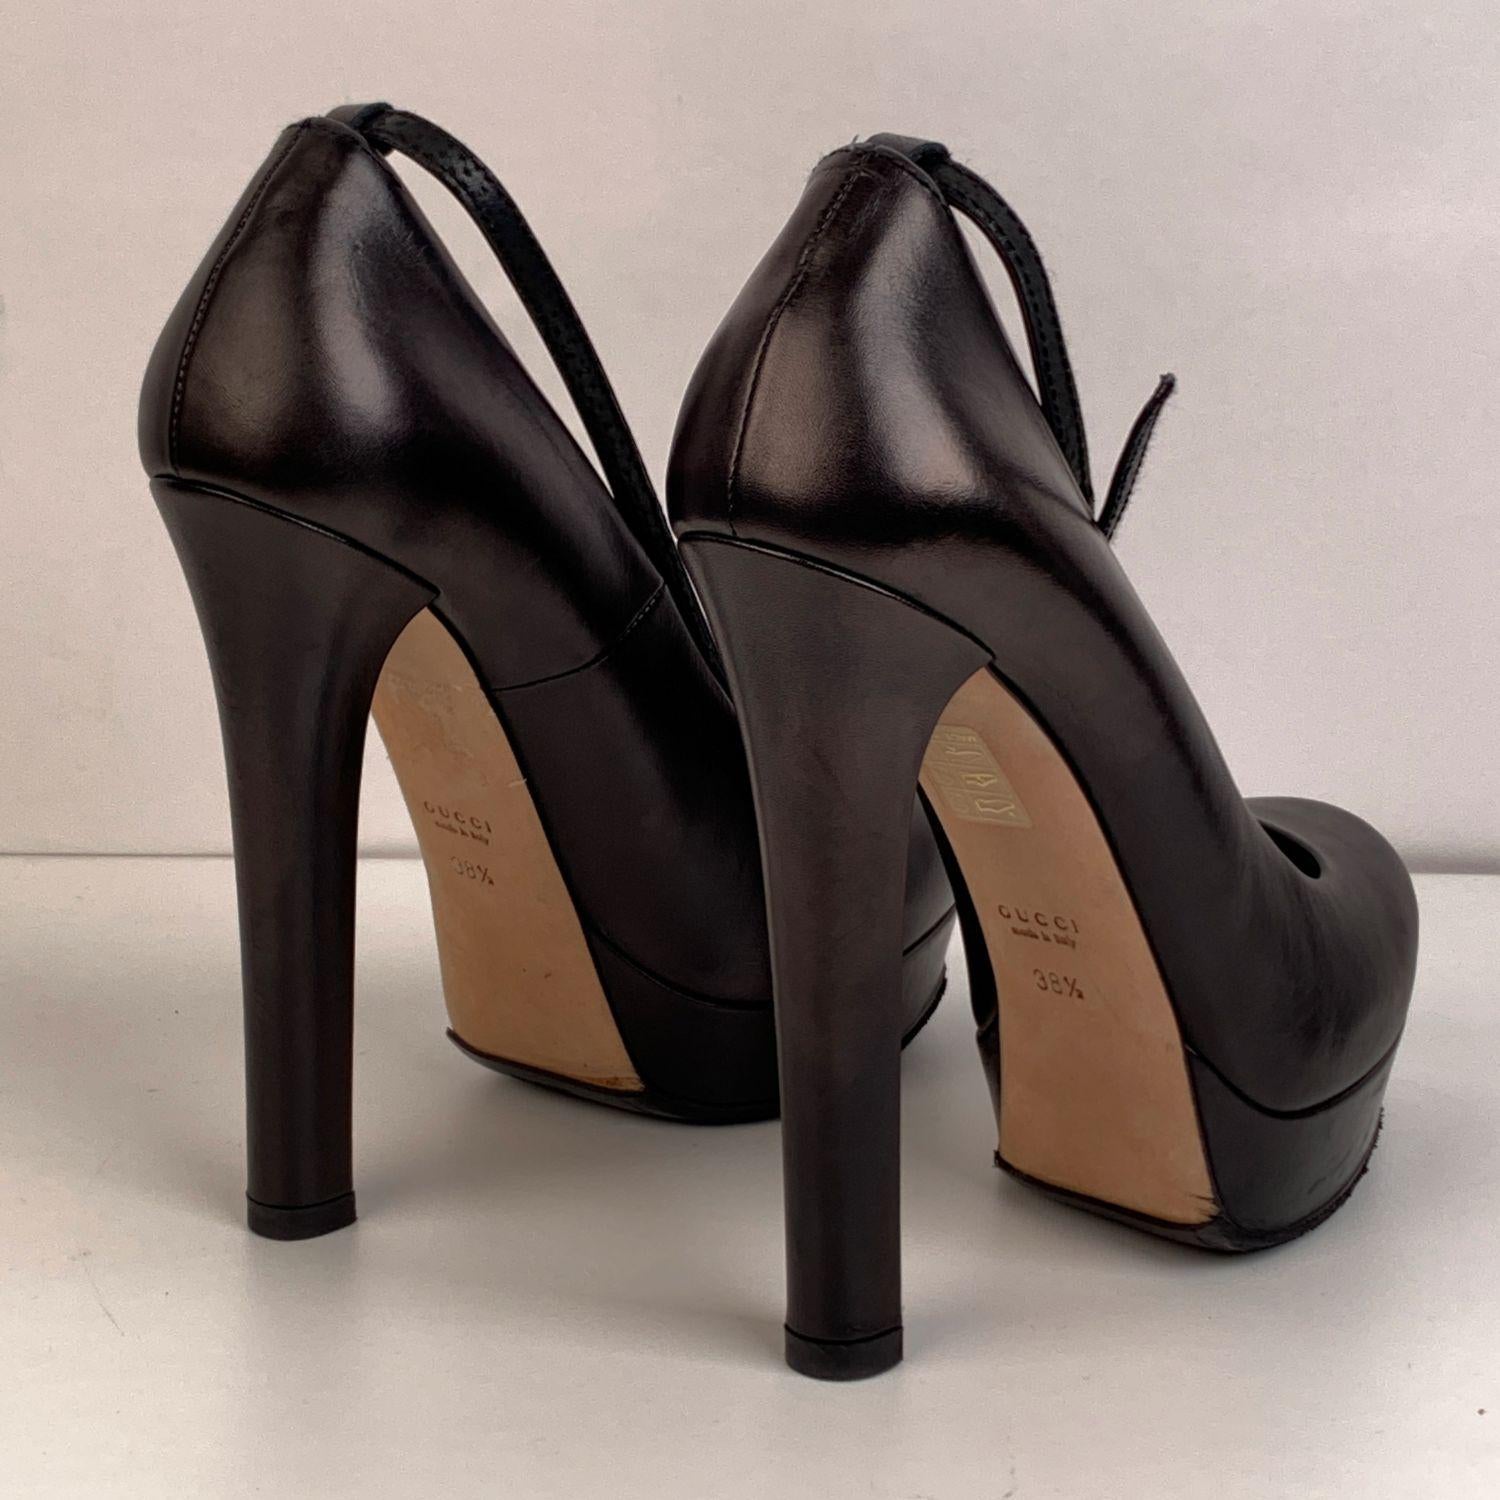 Gucci Black Leather Platform Pumps Heels with Ankle Strap Size 38.5 1